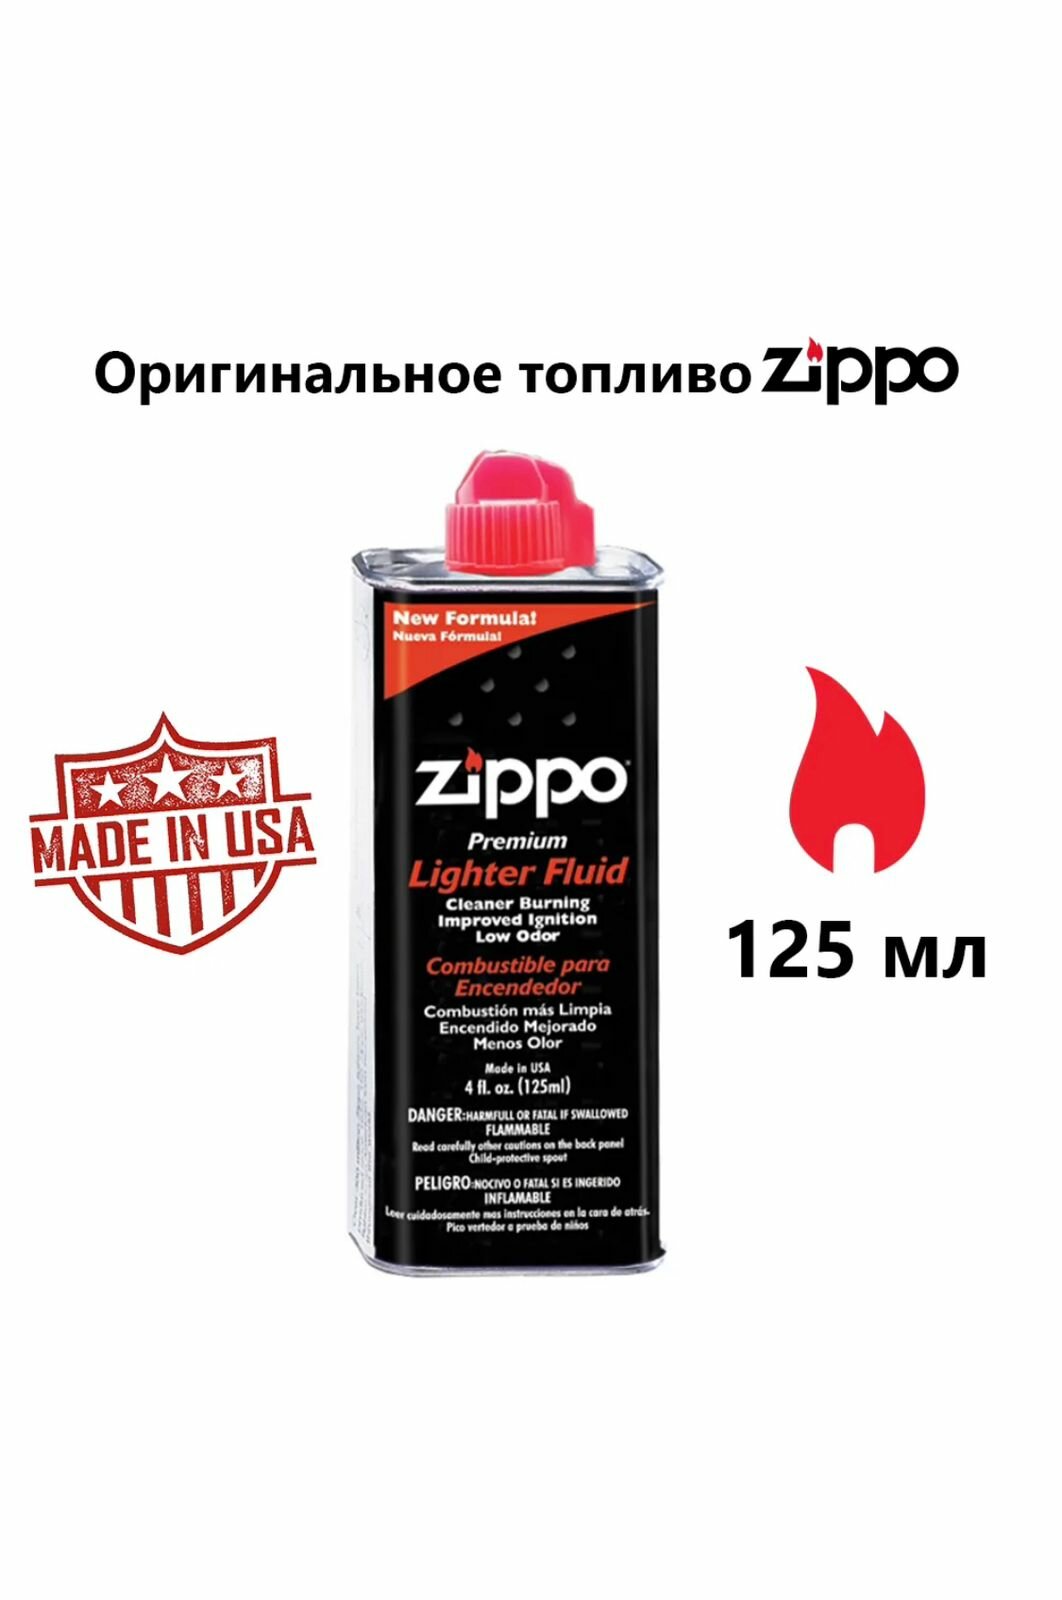 Топливо для зажигалки Zippo (Бензин Zippo) 125 мл, набор 4 штуки - фотография № 4